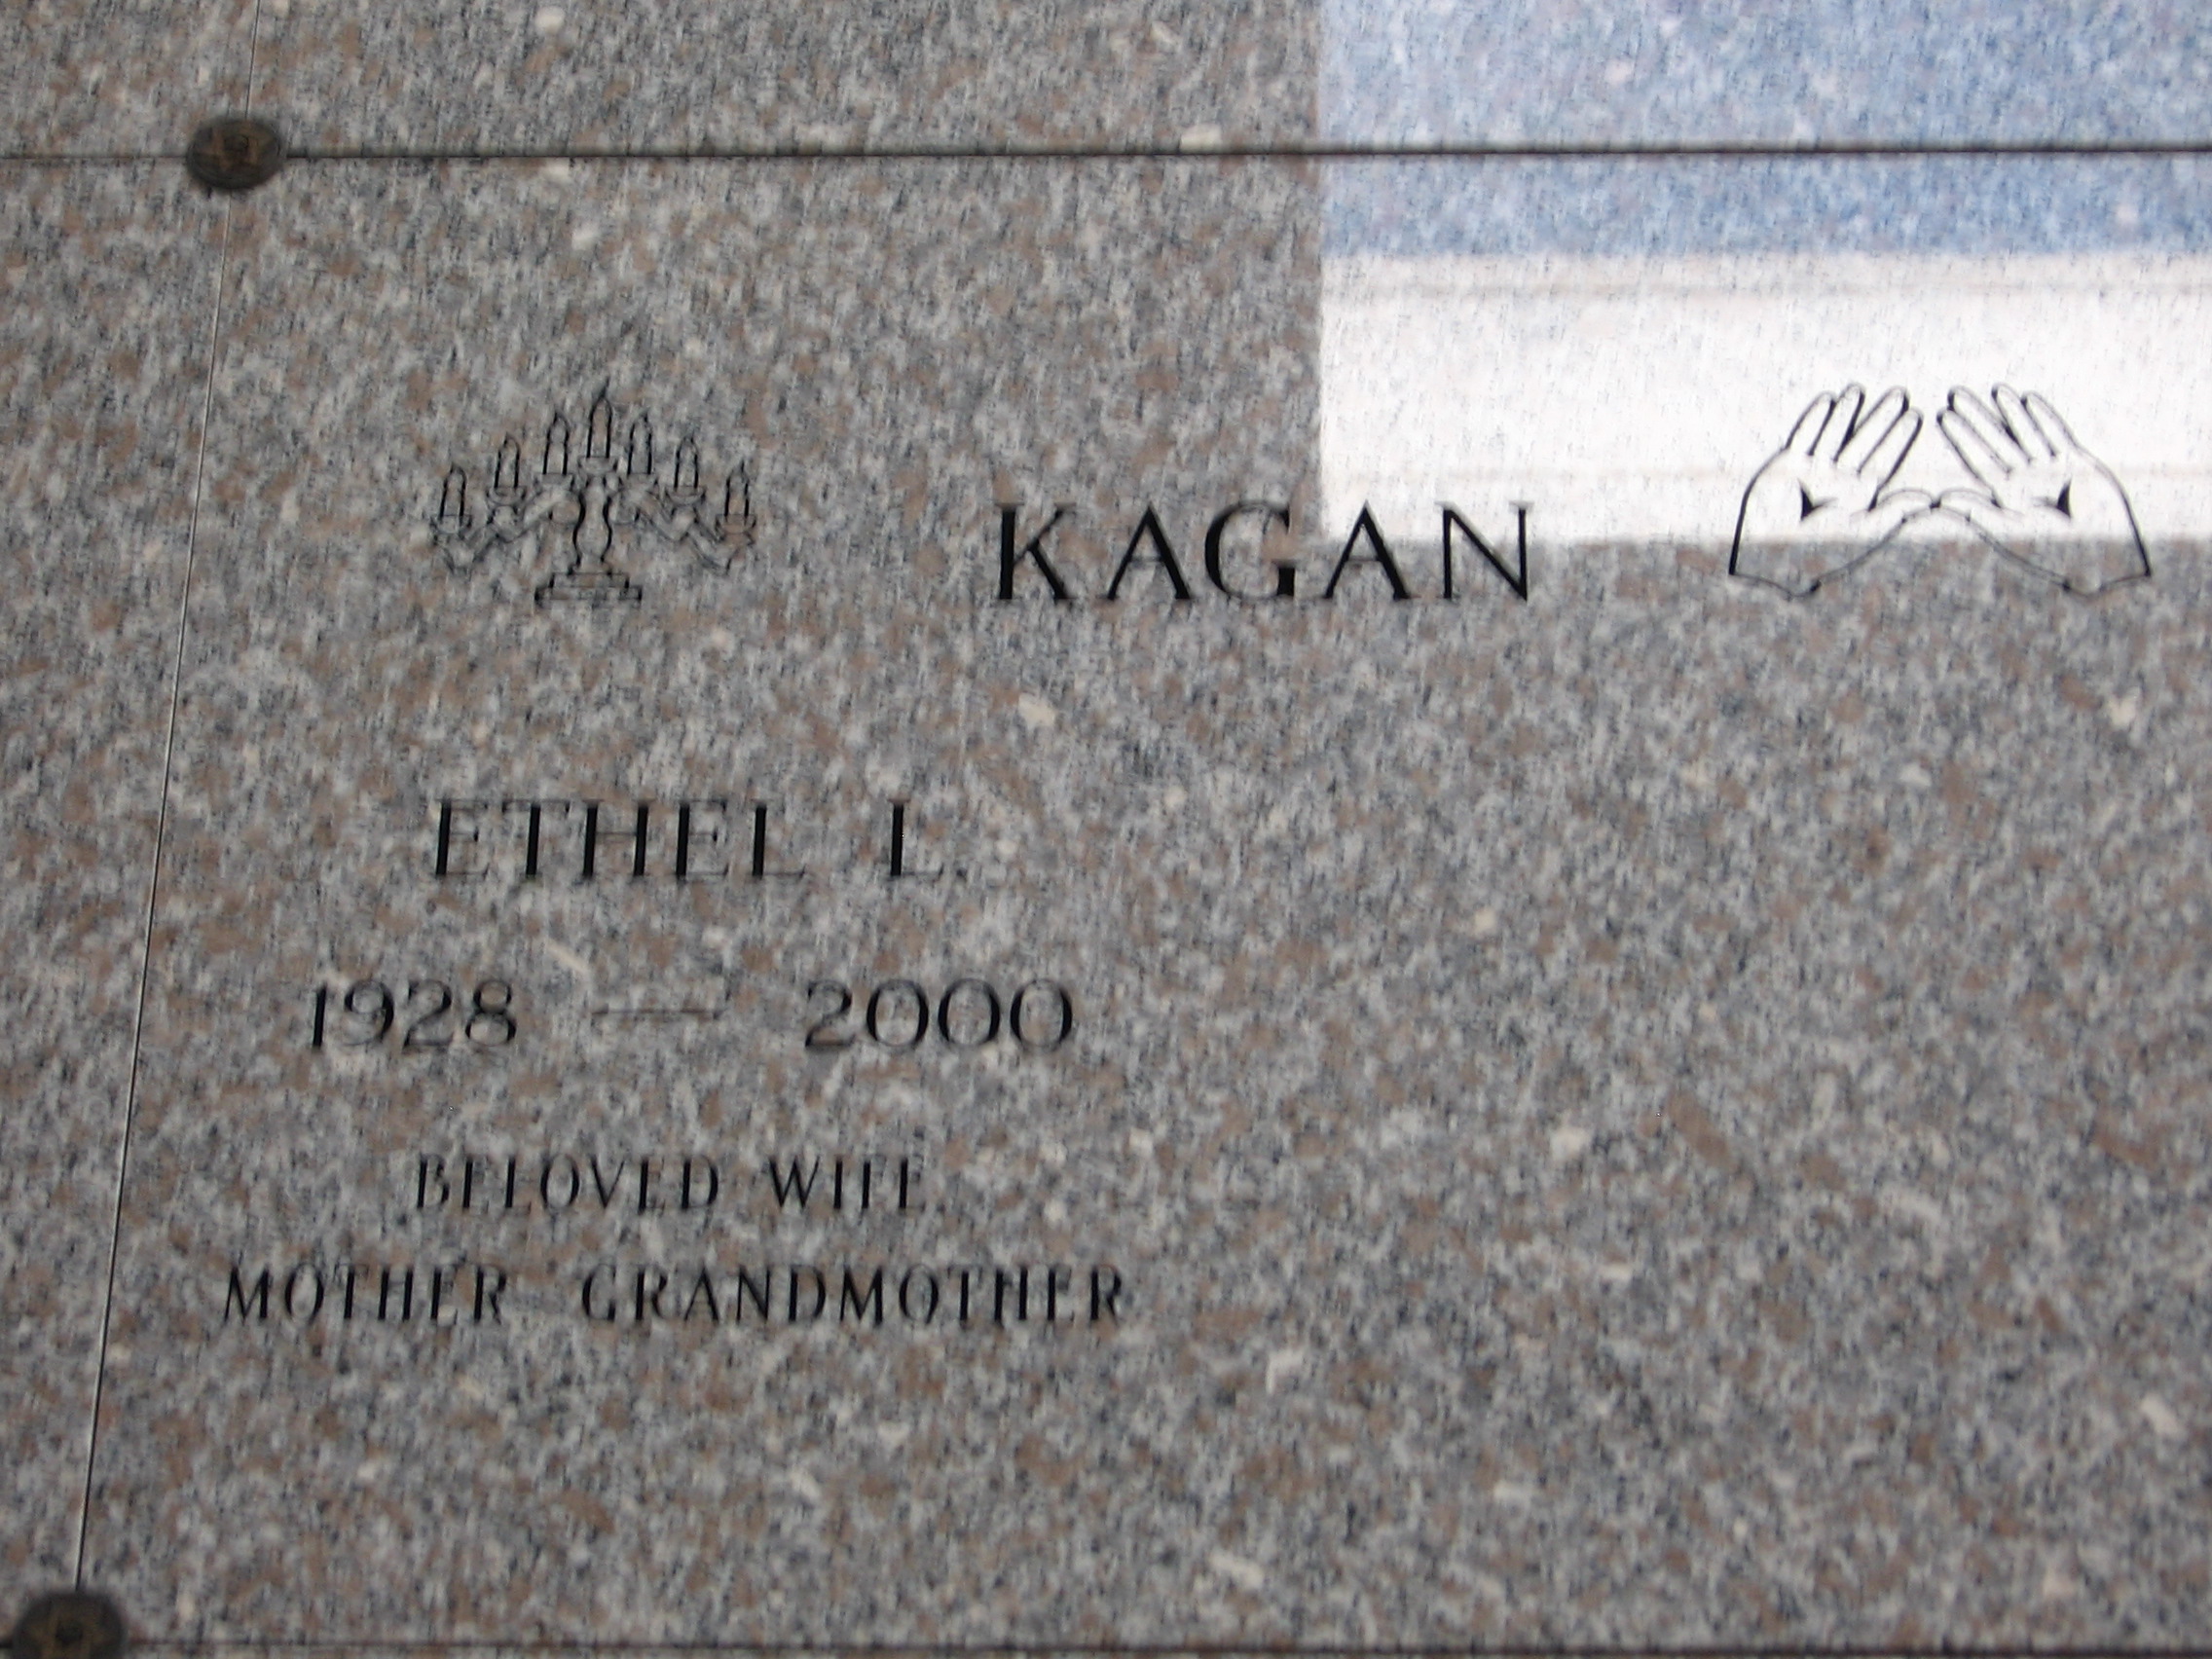 Ethel L Kagan